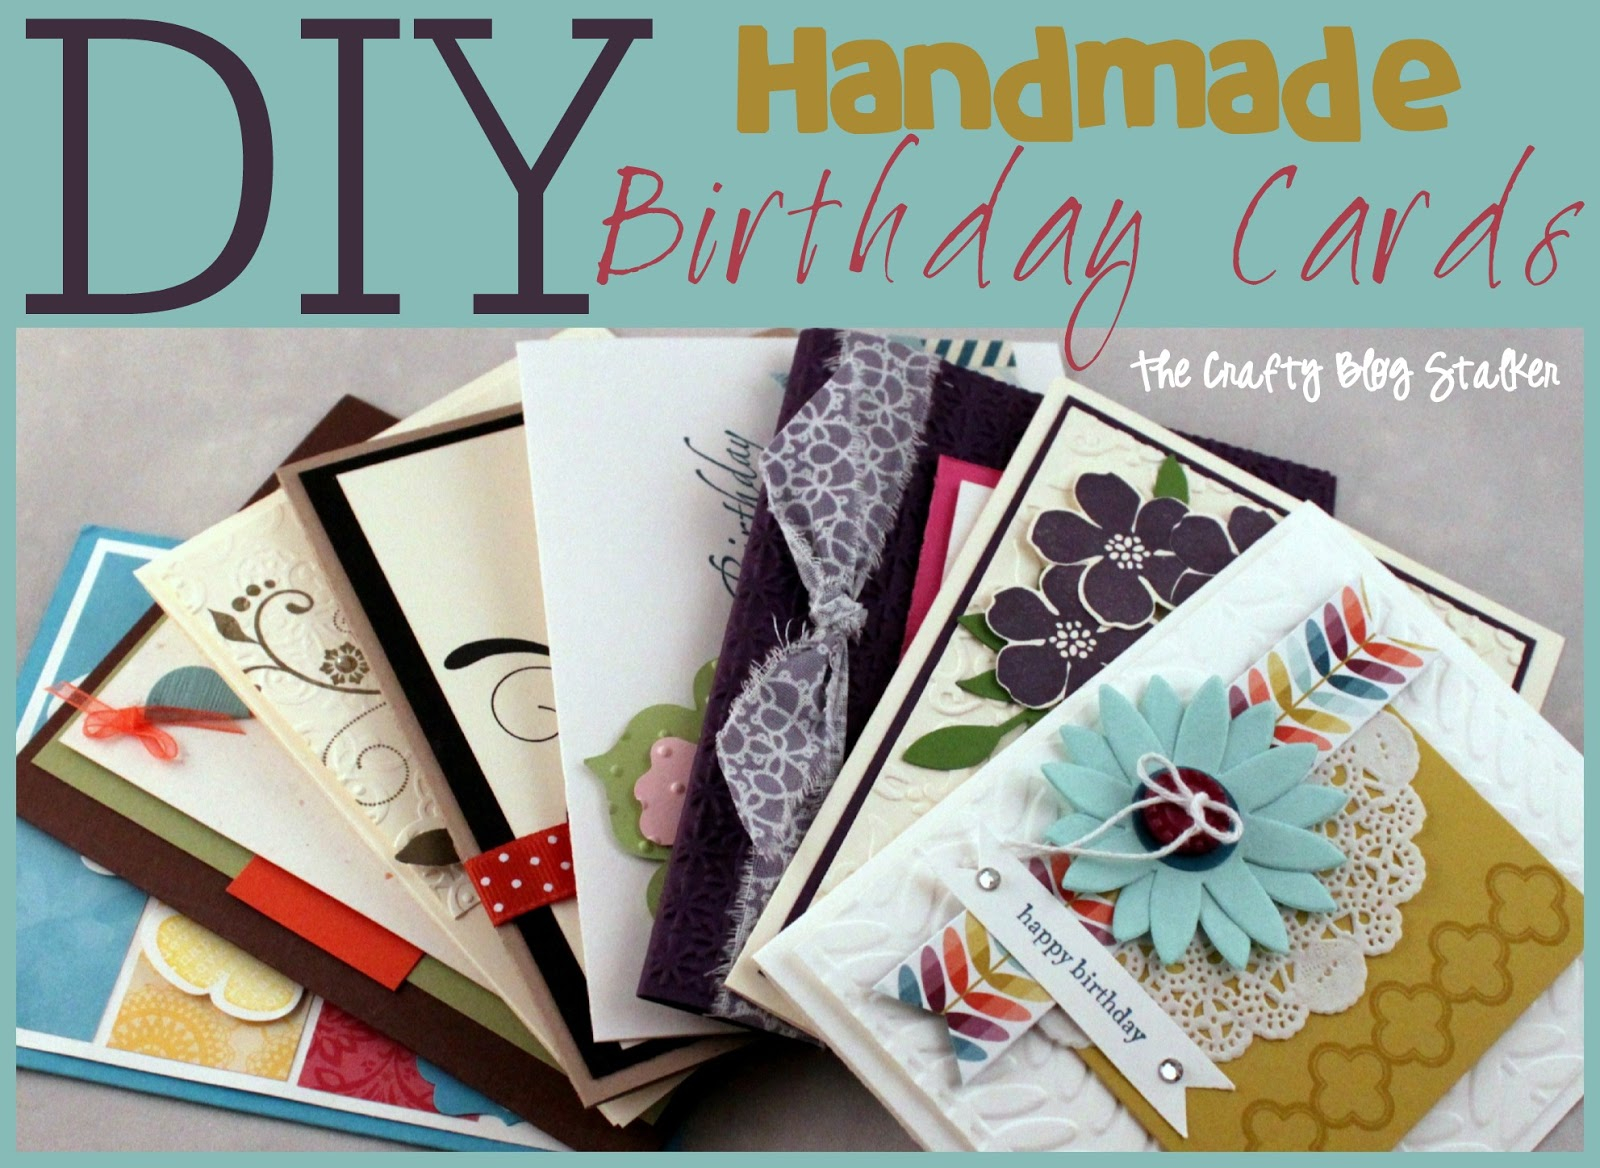 Diy Birthday Card Ideas Handmade Birthday Card Ideas The Crafty Blog Stalker